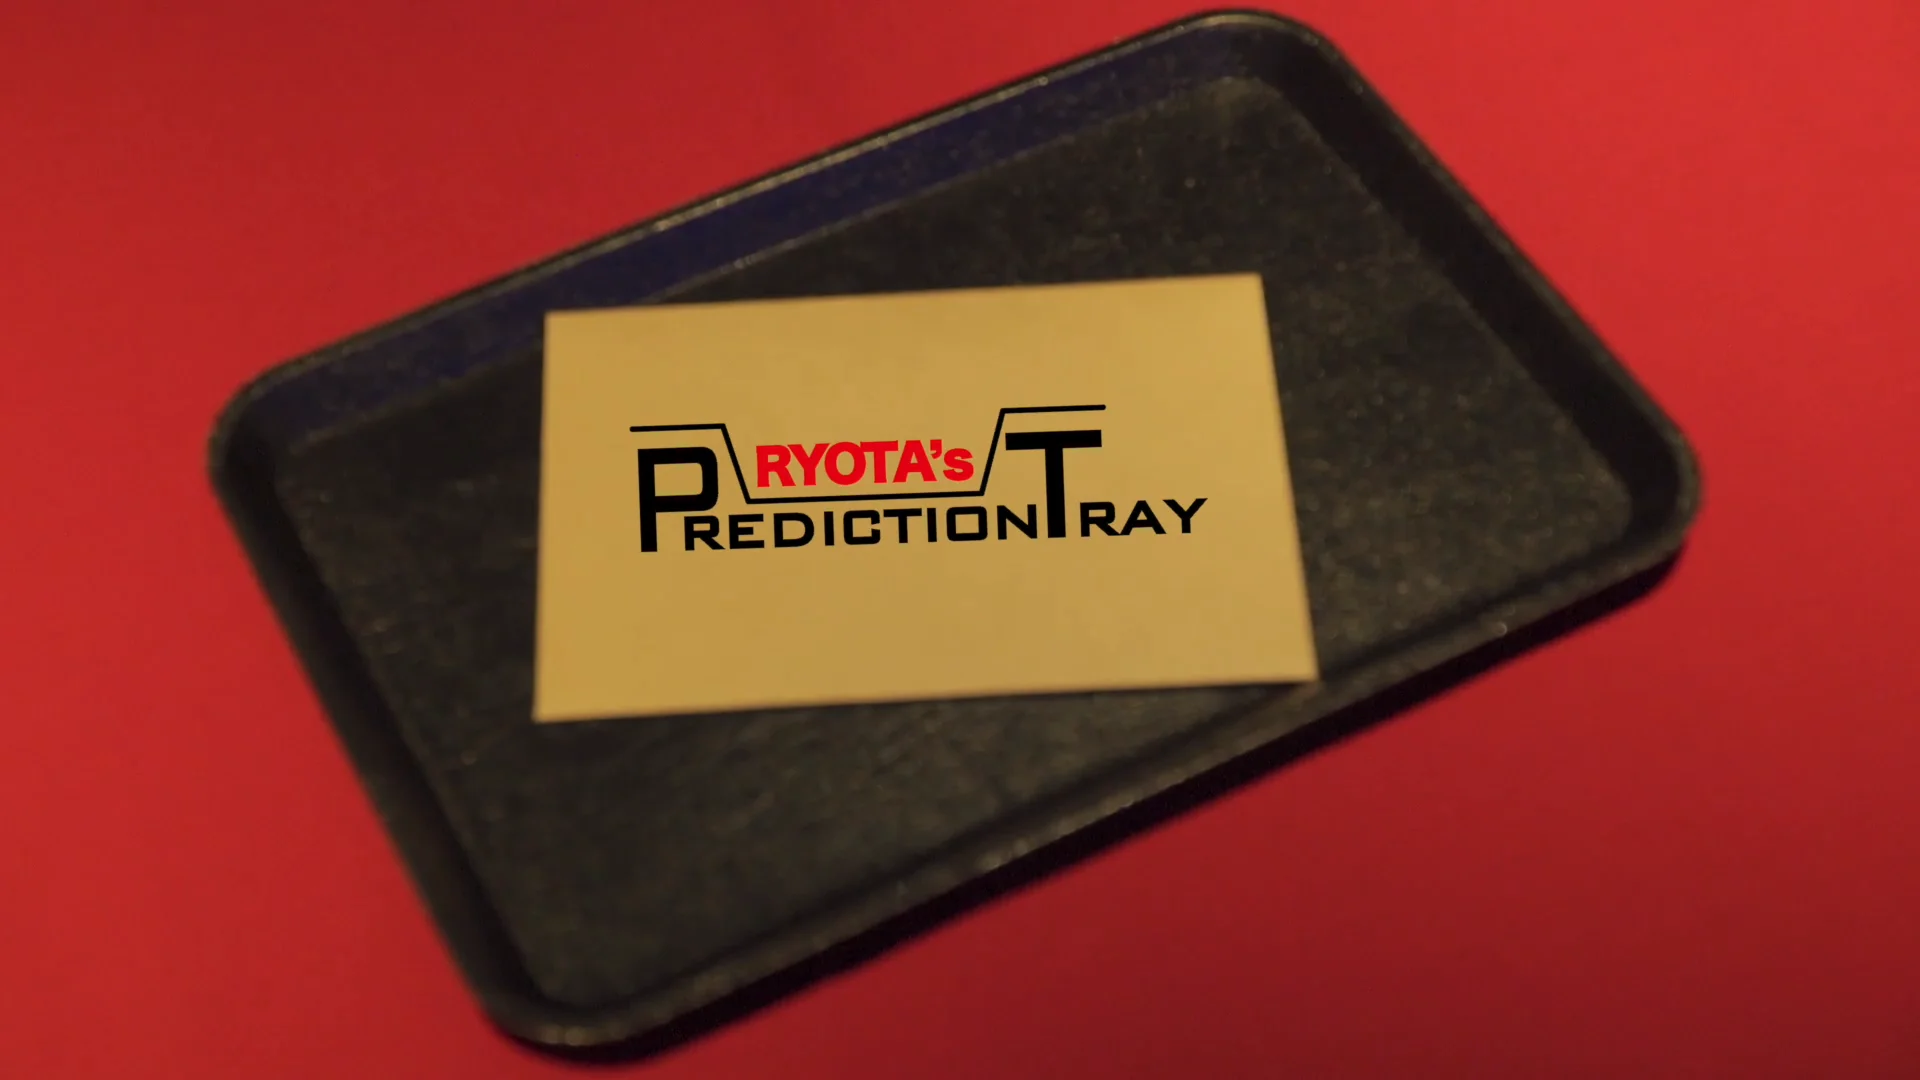 RYOTA's Prediction Tray Trailer